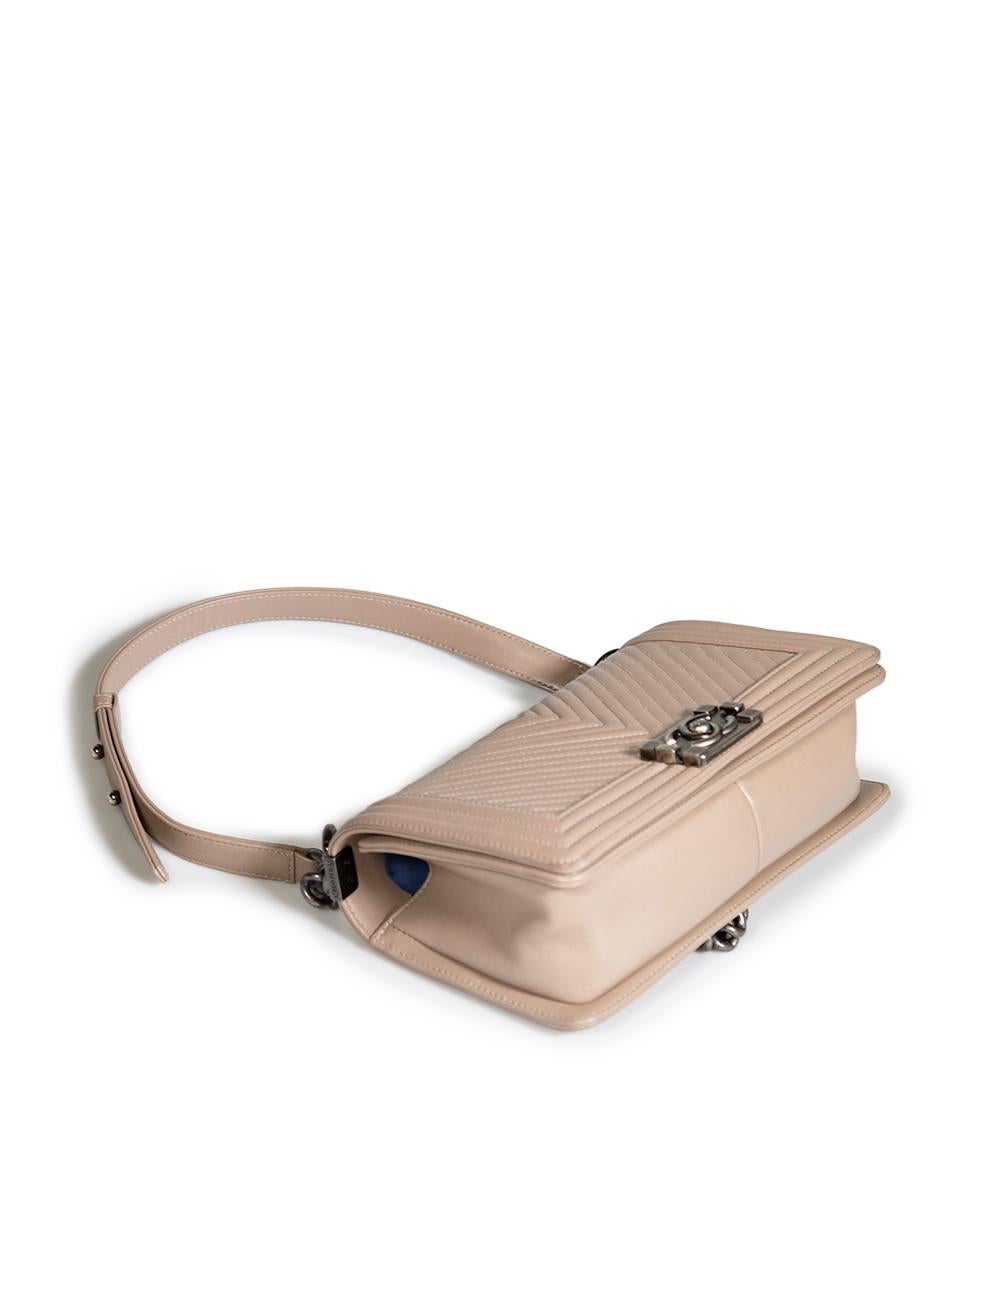 Chanel 2014 Beige Lambskin Medium Chevron Boy Bag Ruthenium Hardware For Sale 1